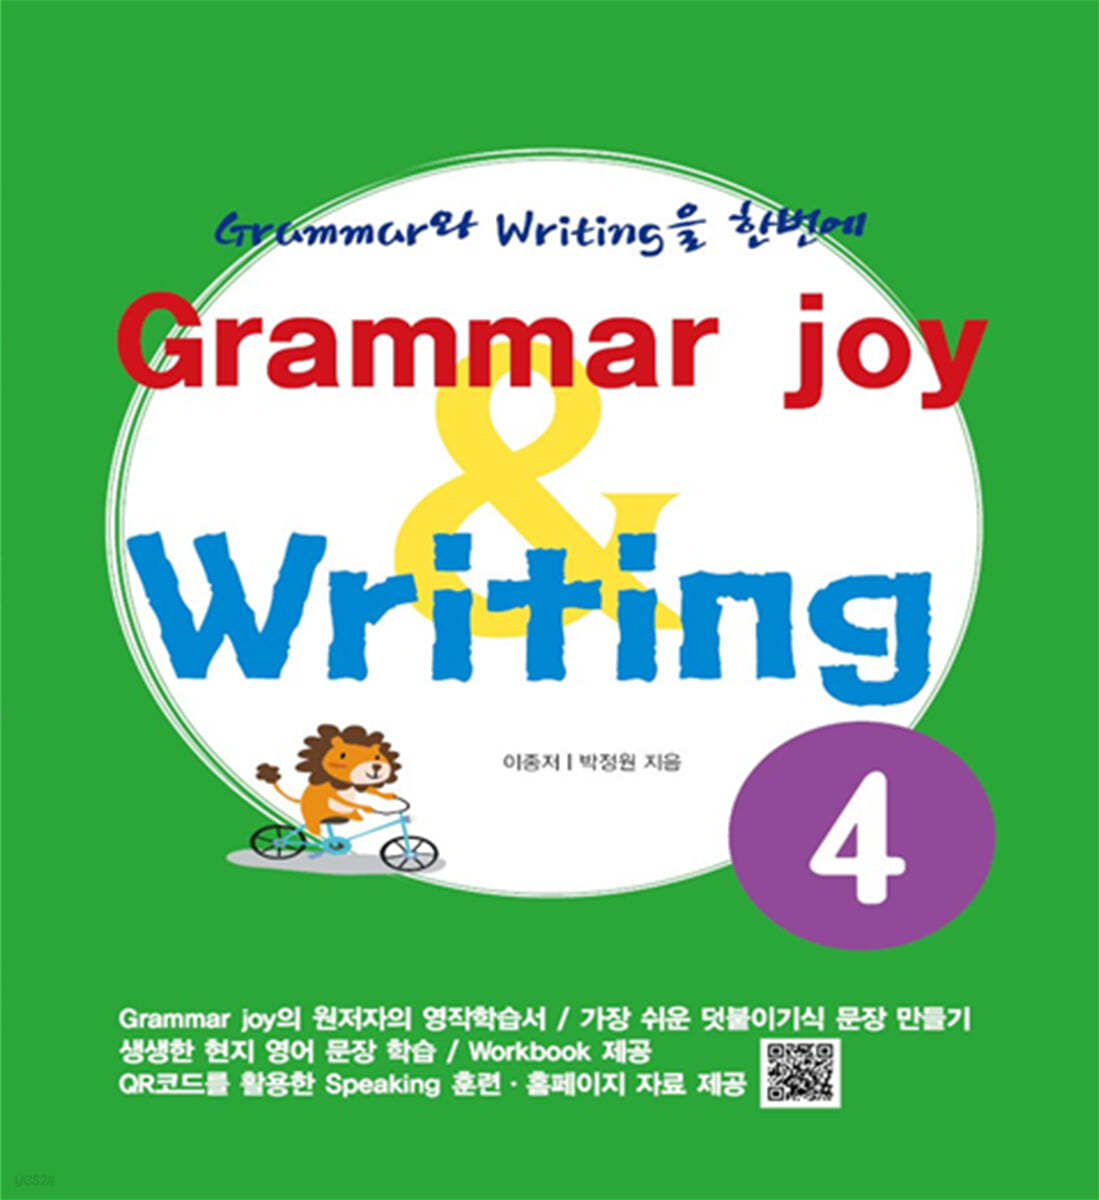 Grammar joy &amp; Writing 4